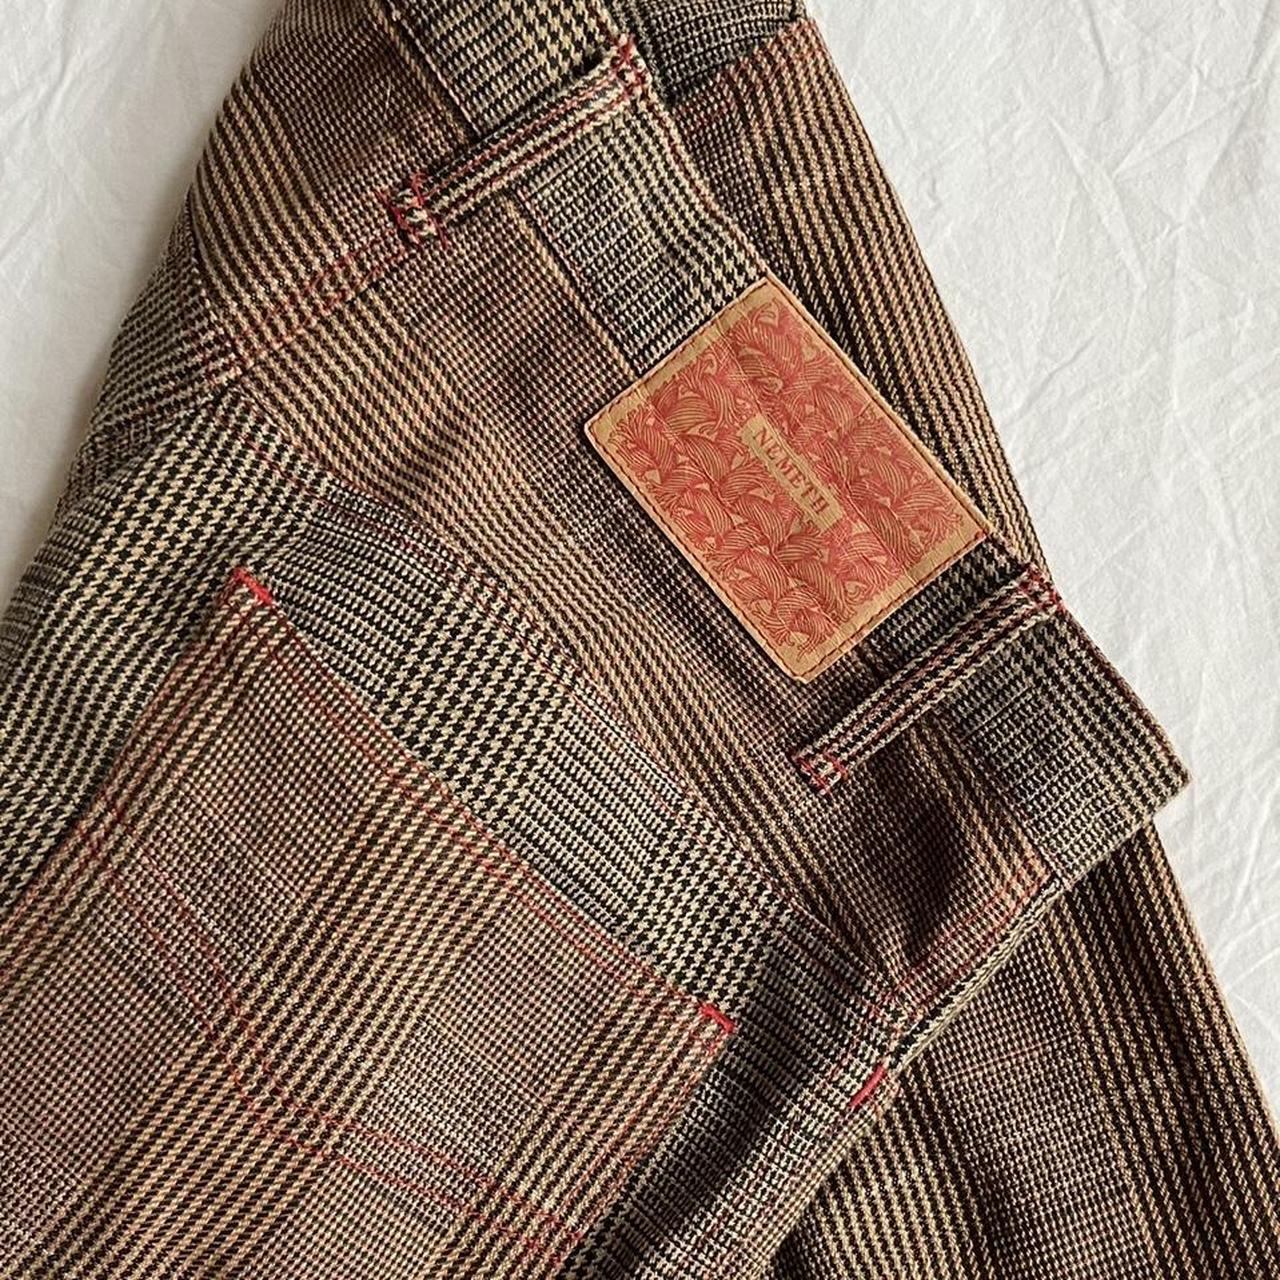 Christopher Nemeth “Embroidered” Jacket & Fringe Pants, 1980s or 1990s